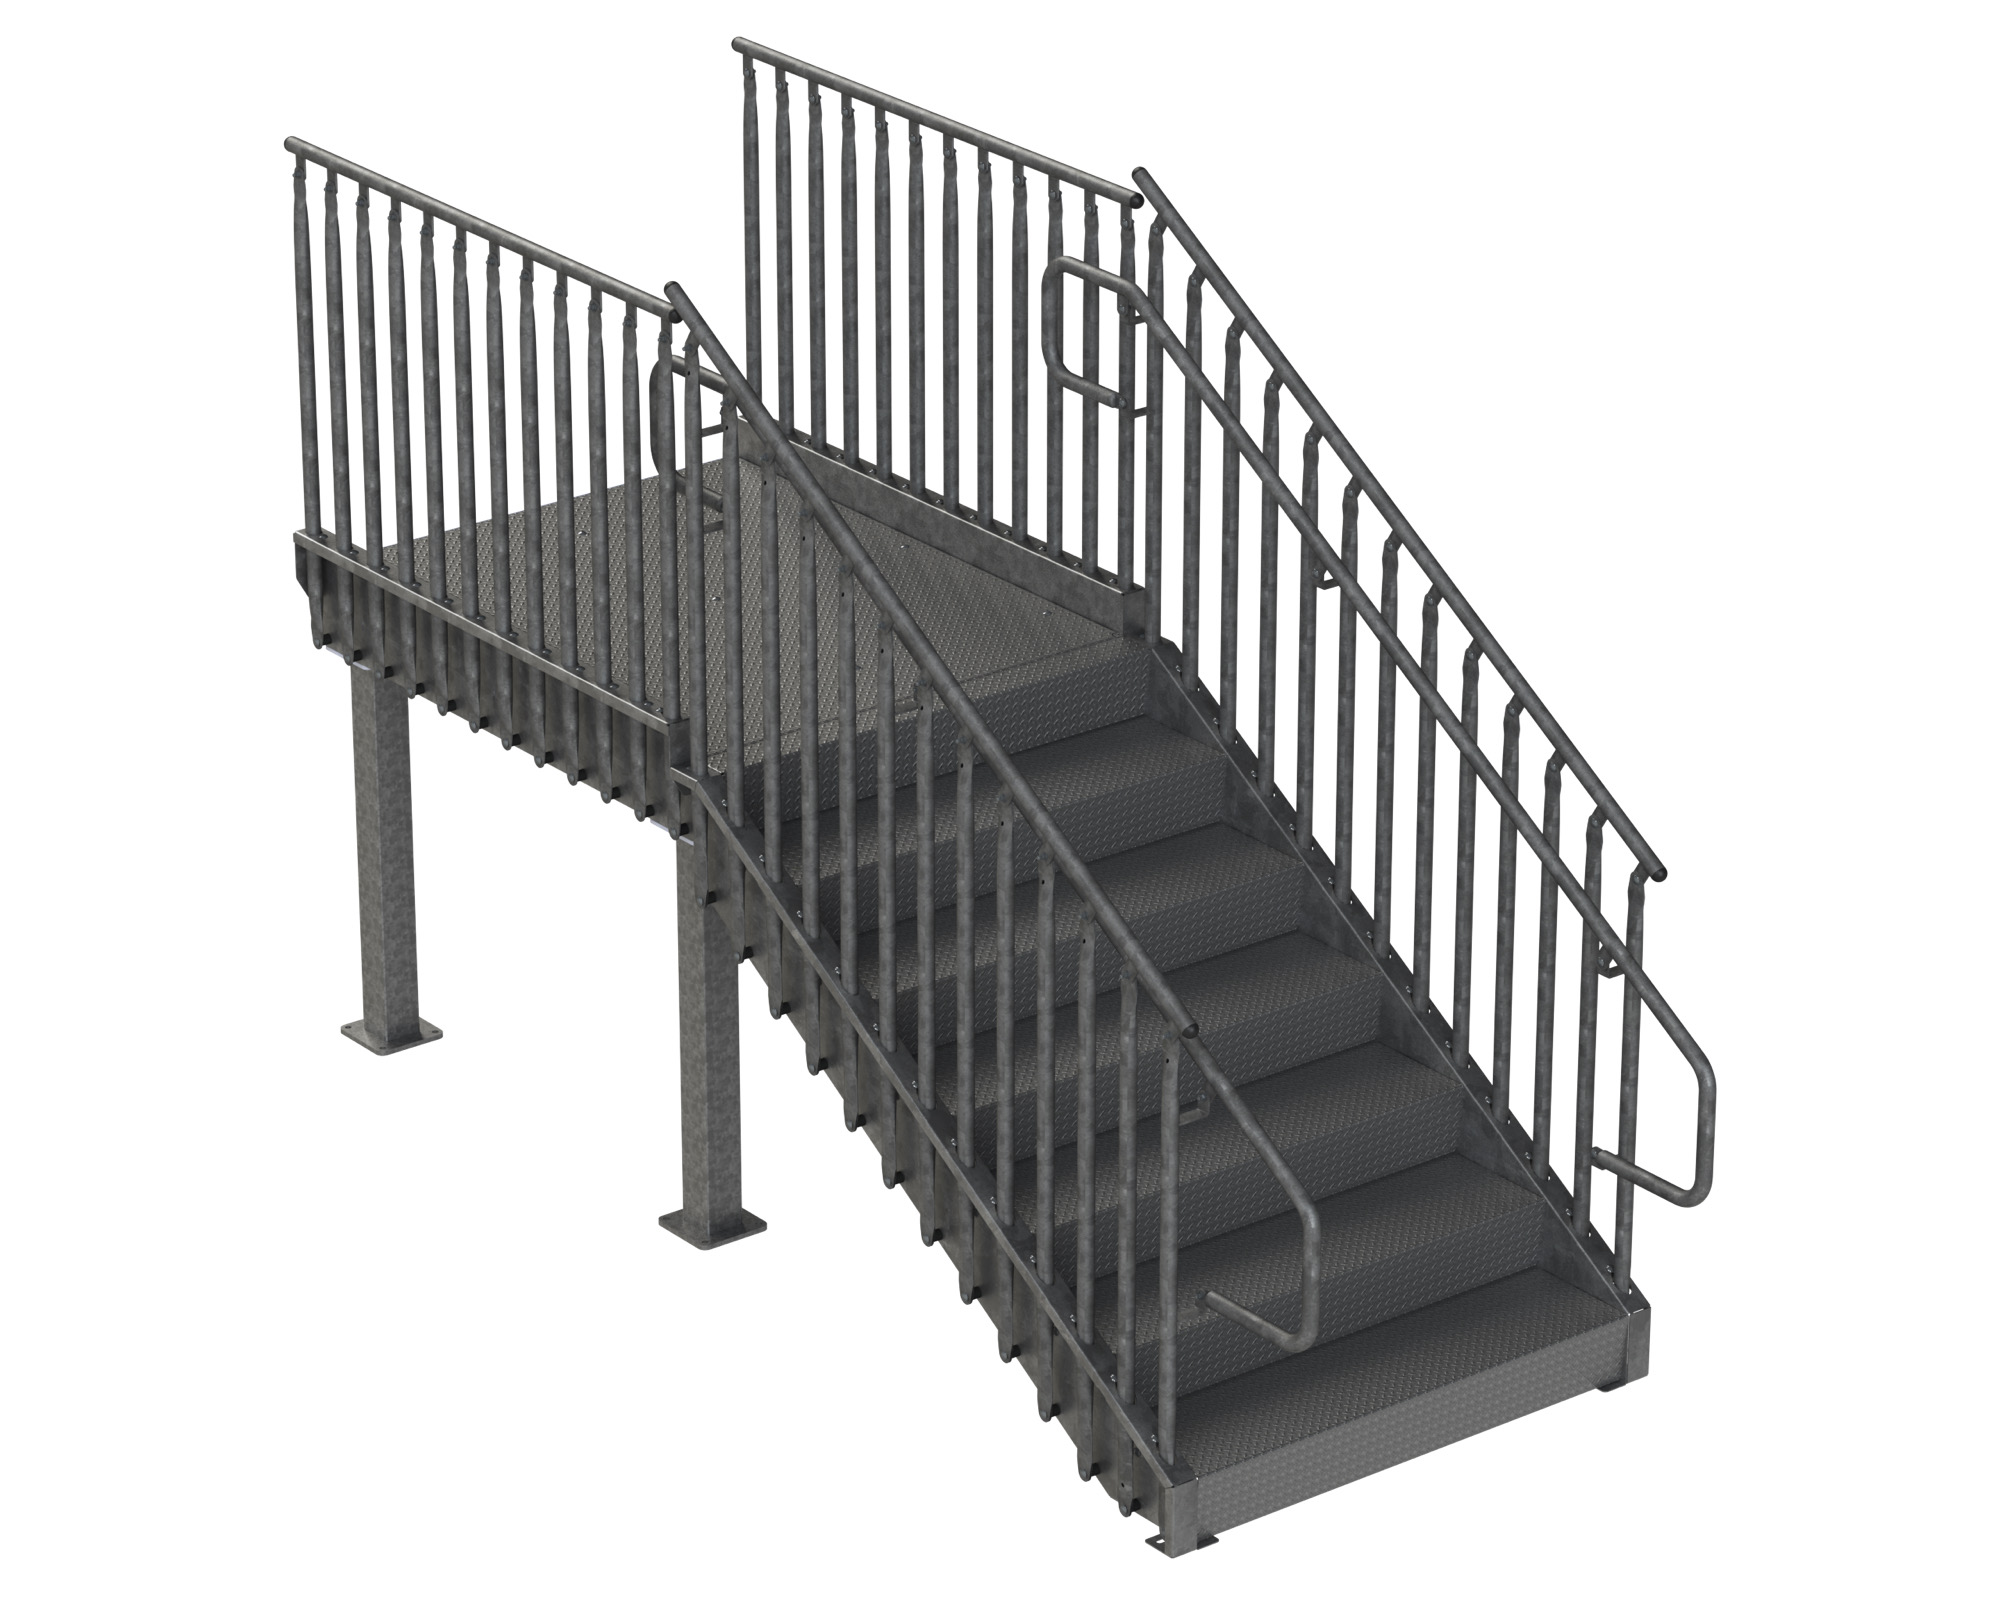 Loading Dock Stairs, Steel, Galvanized, Diamond Plate, IBC-Commercial, Door Swing Platform